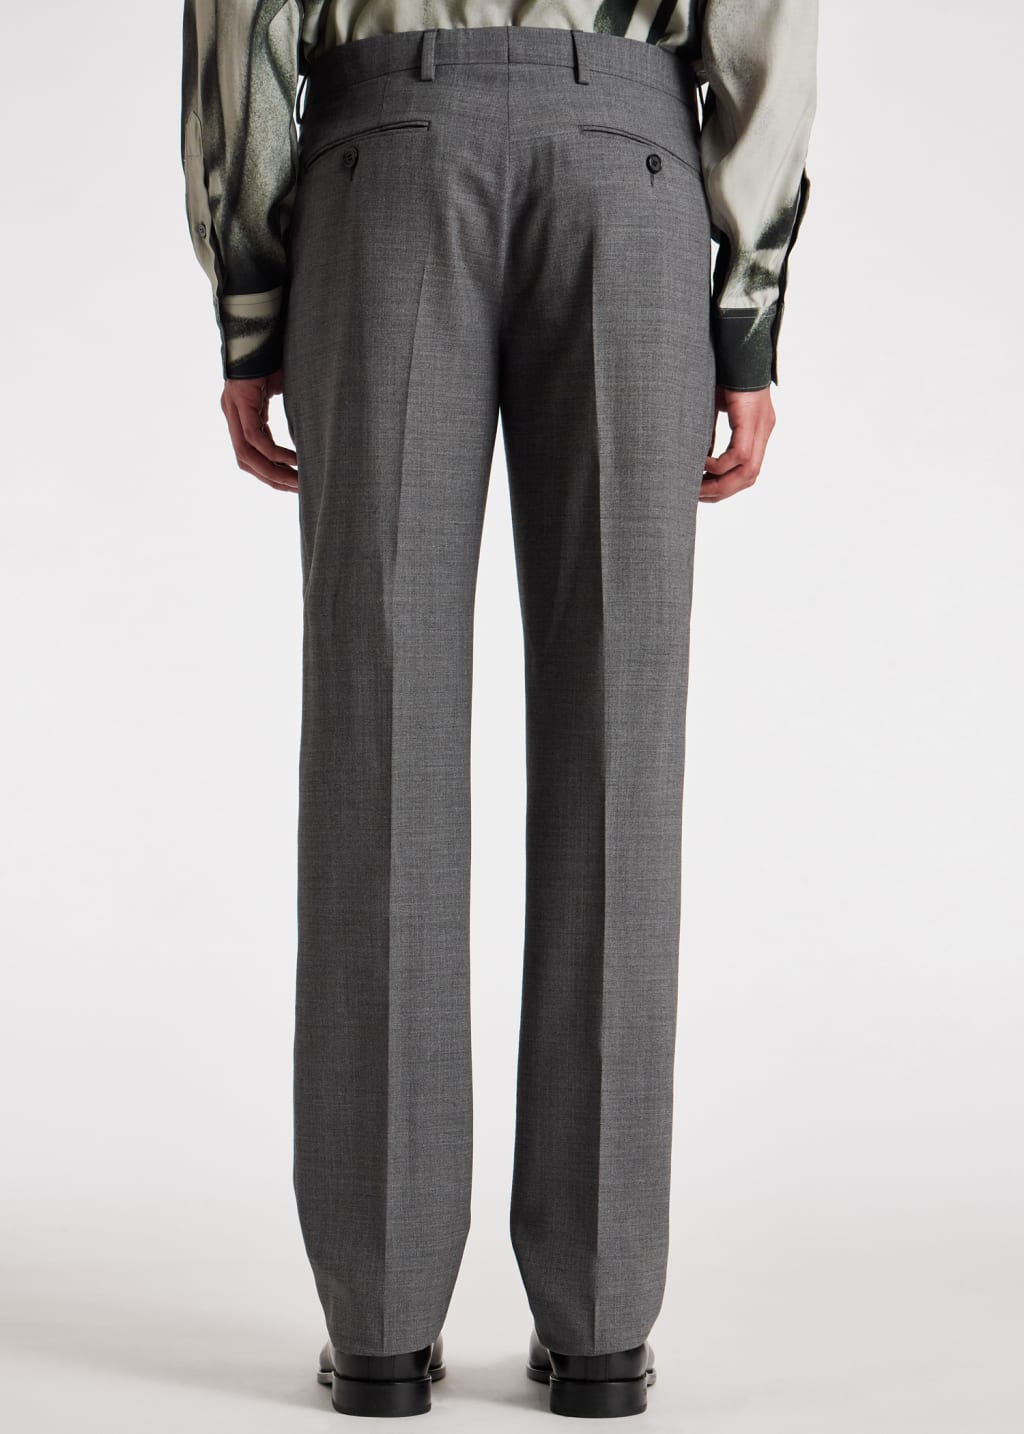 Model View - Grey Fresco Wool Straight Leg Trousers Paul Smith